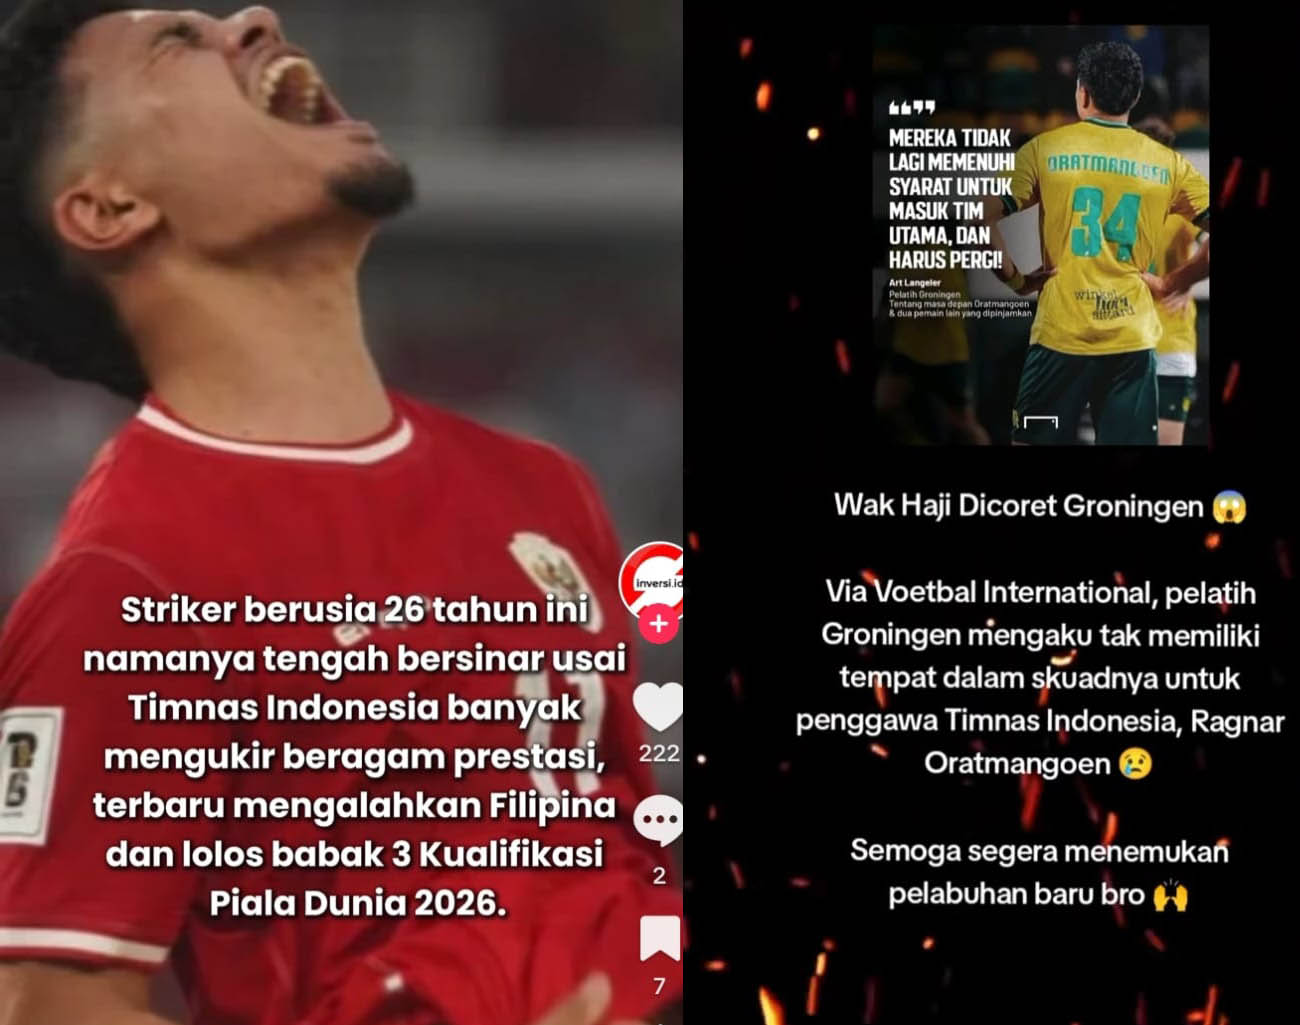 Pemain Belanda-Indonesia Ragnar Oratmangoen Bahagia Bela Timnas, Groningen Putus Kontrak, Piala Dunia 2026